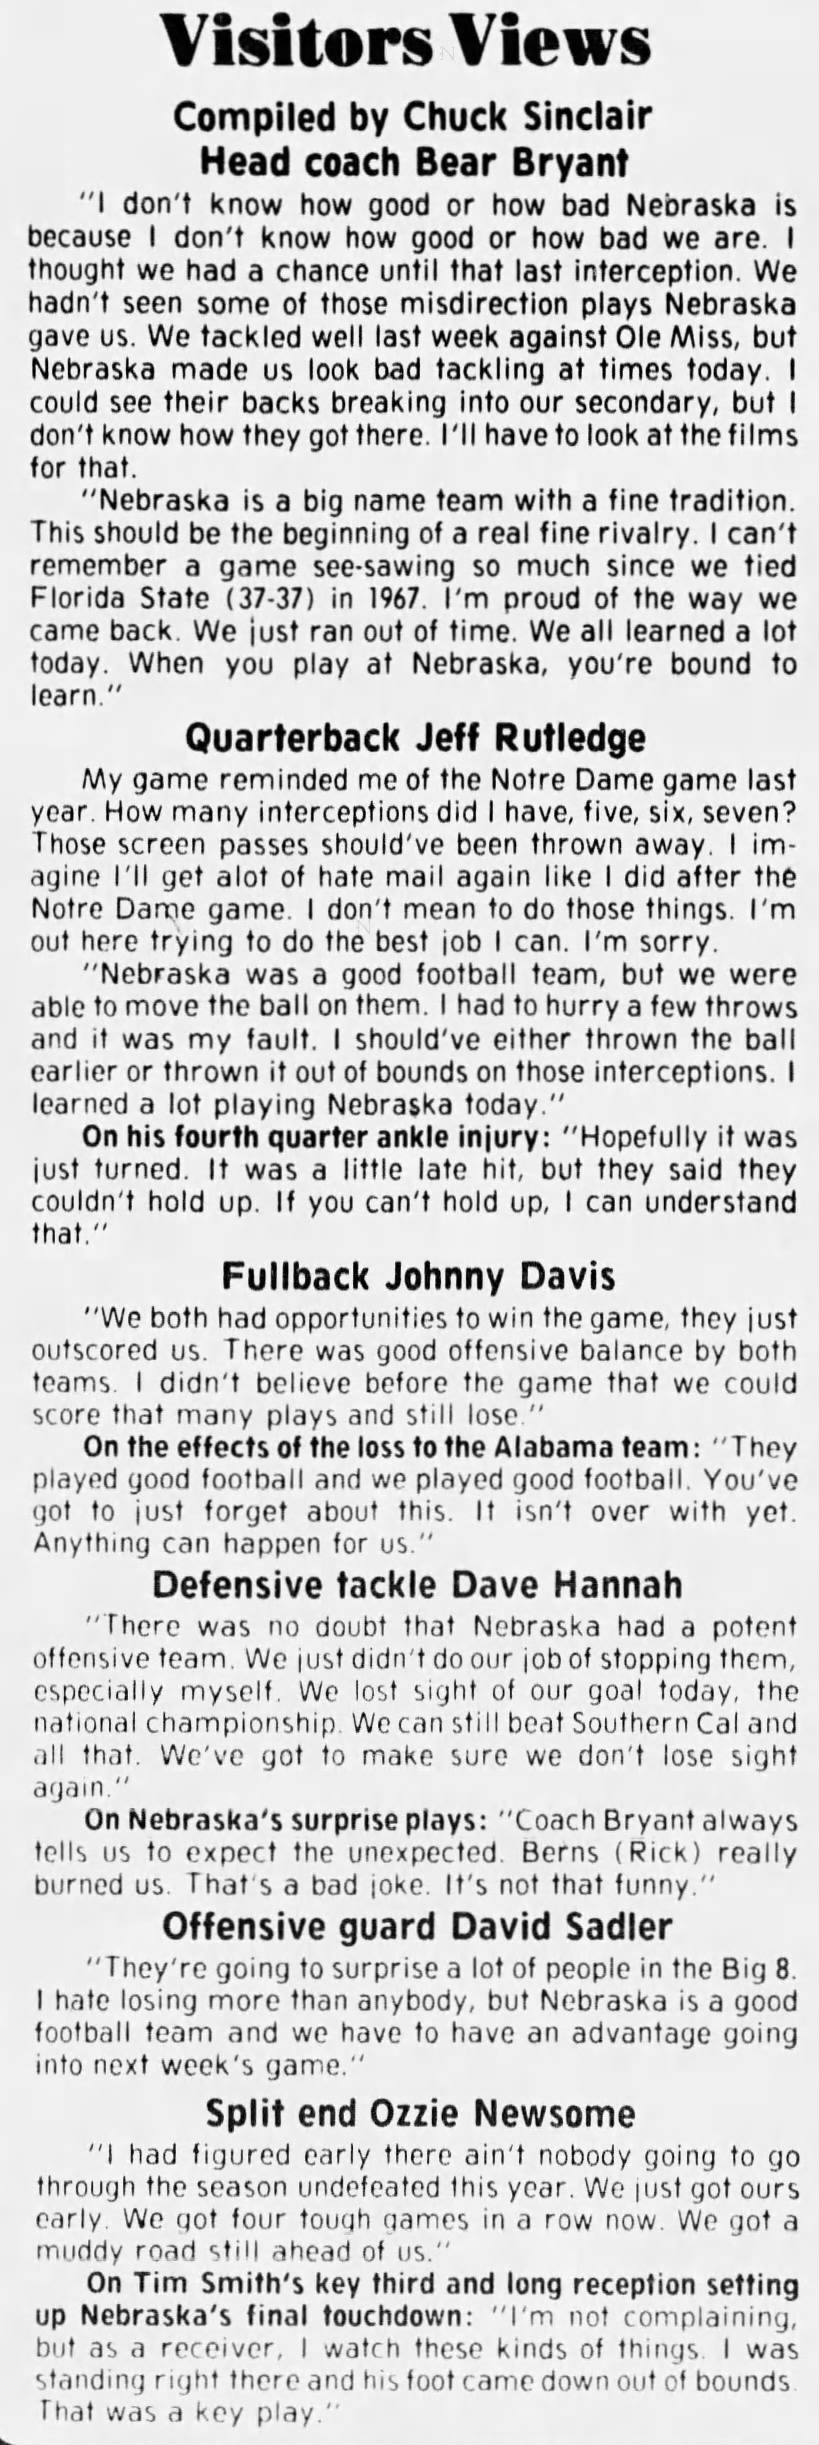 1977 Nebraska-Alabama football, LJS4